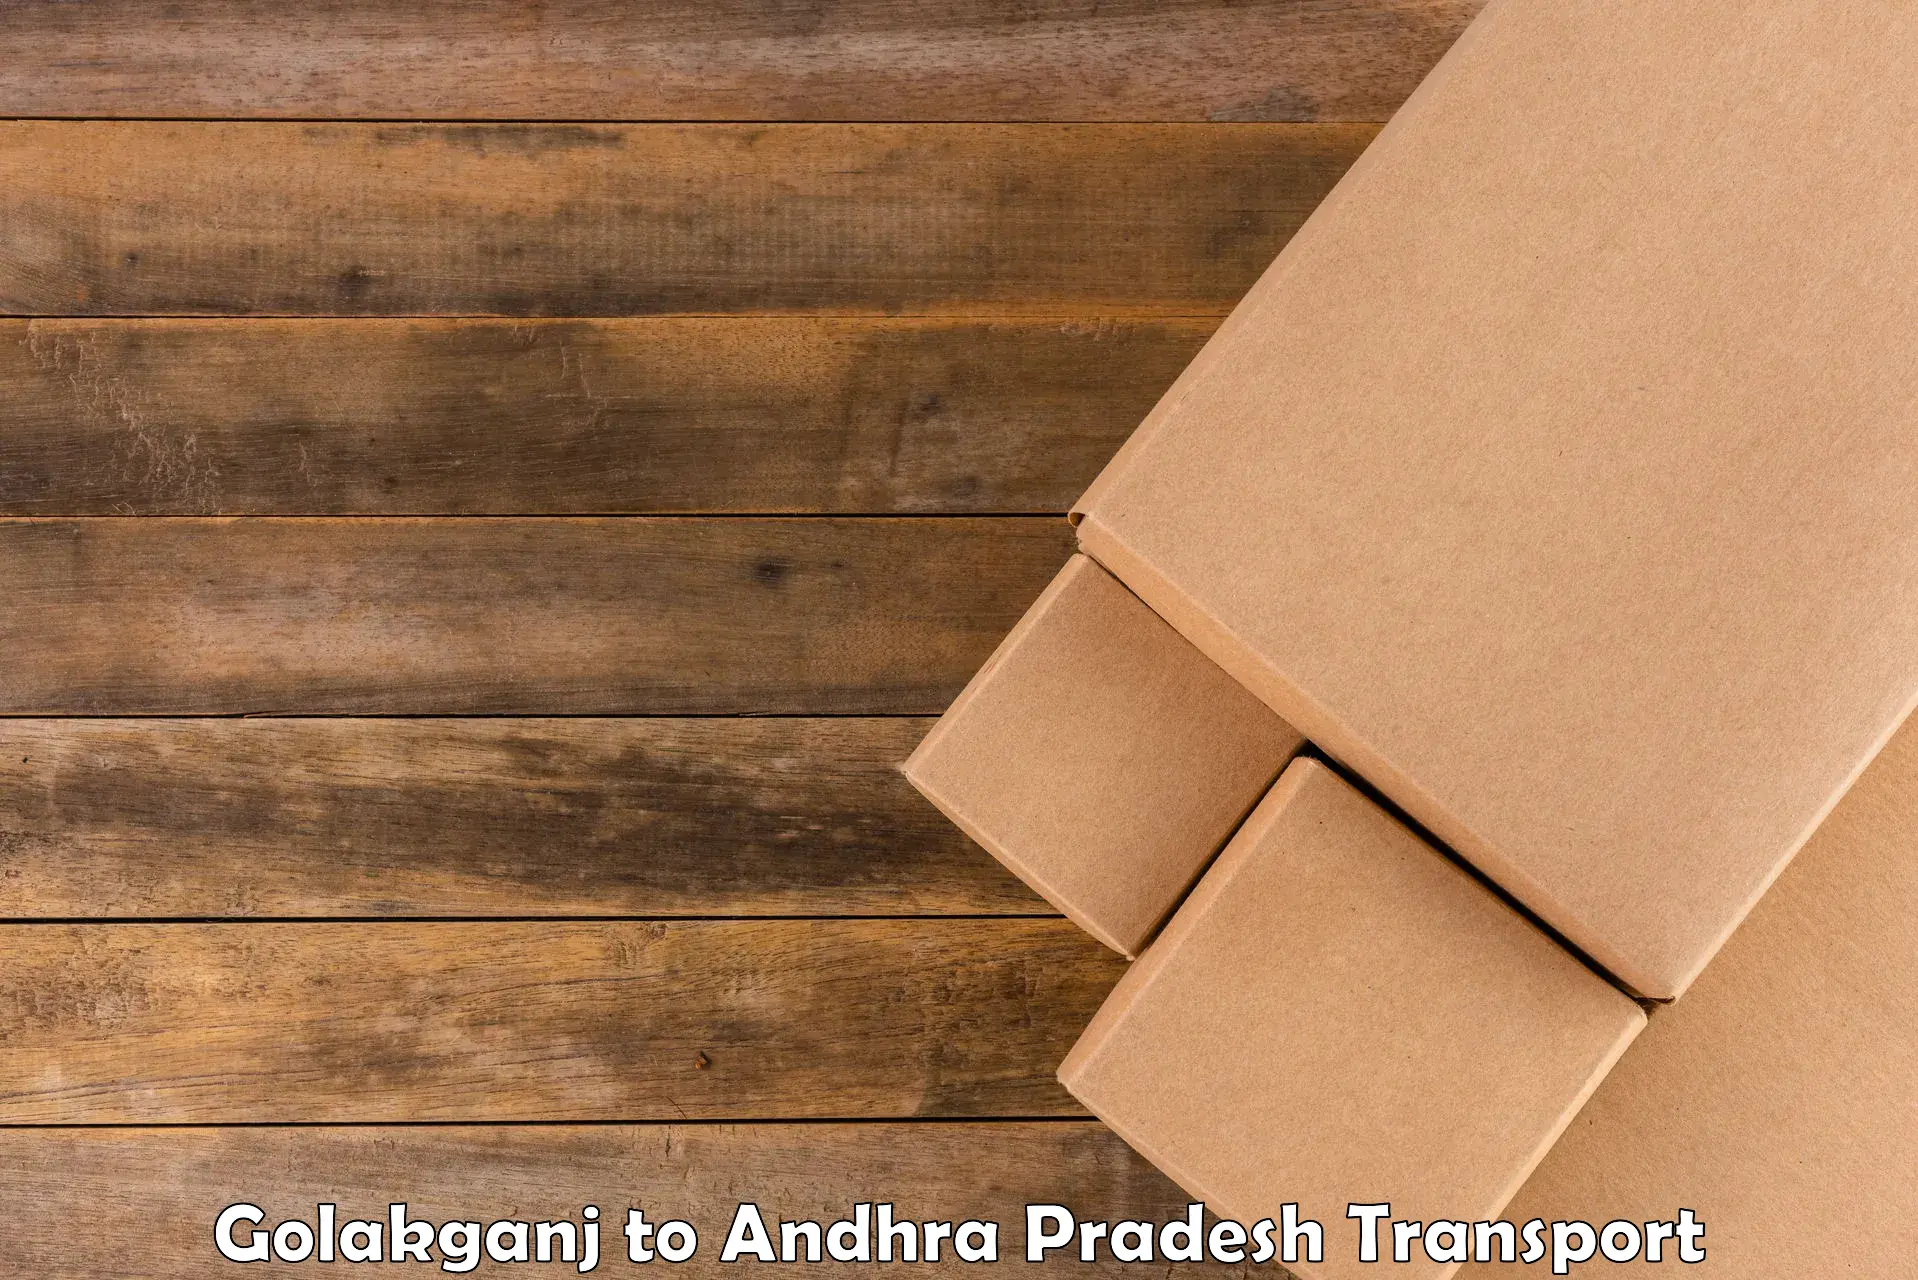 Truck transport companies in India Golakganj to IIT Tirupati